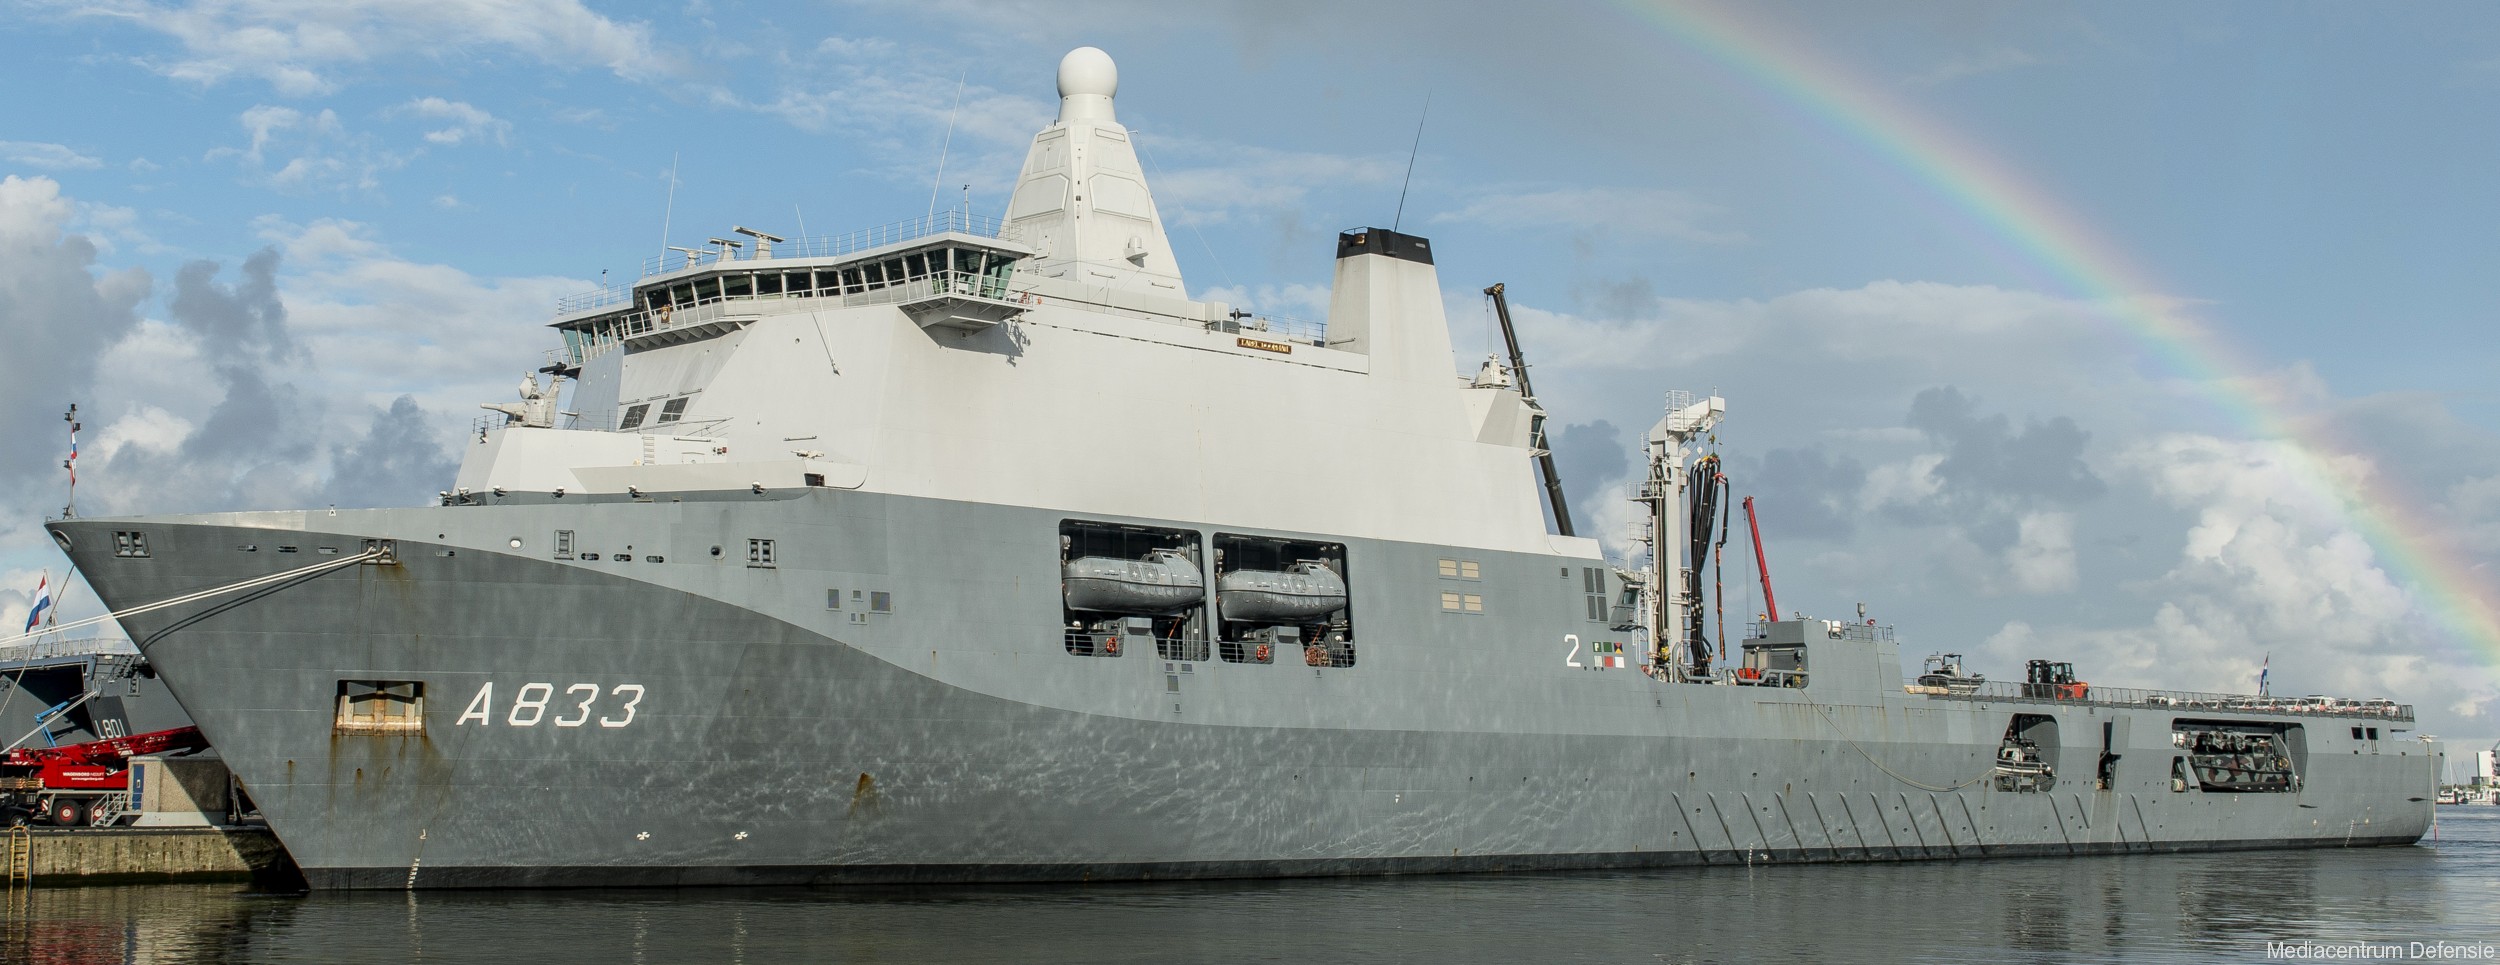 a-833 hnlms karel doorman joint support ship royal netherlands navy koninklijke marine 11